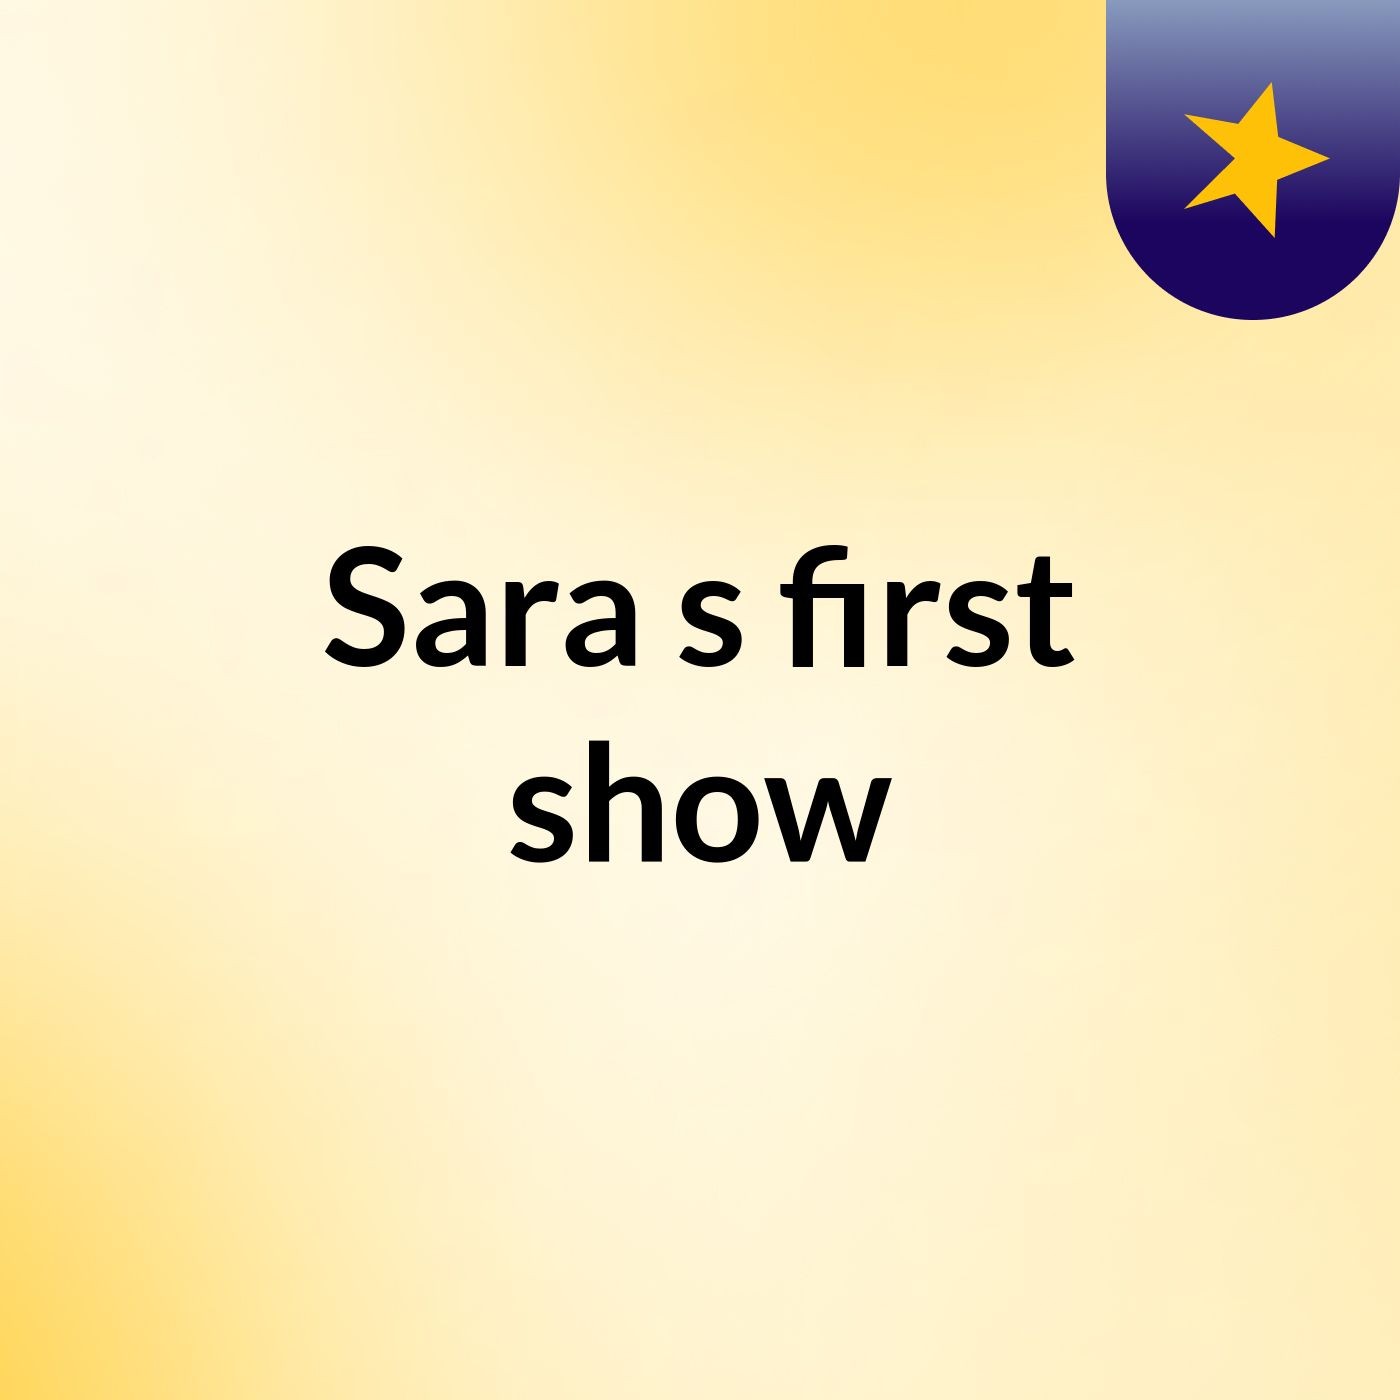 Sara's first show